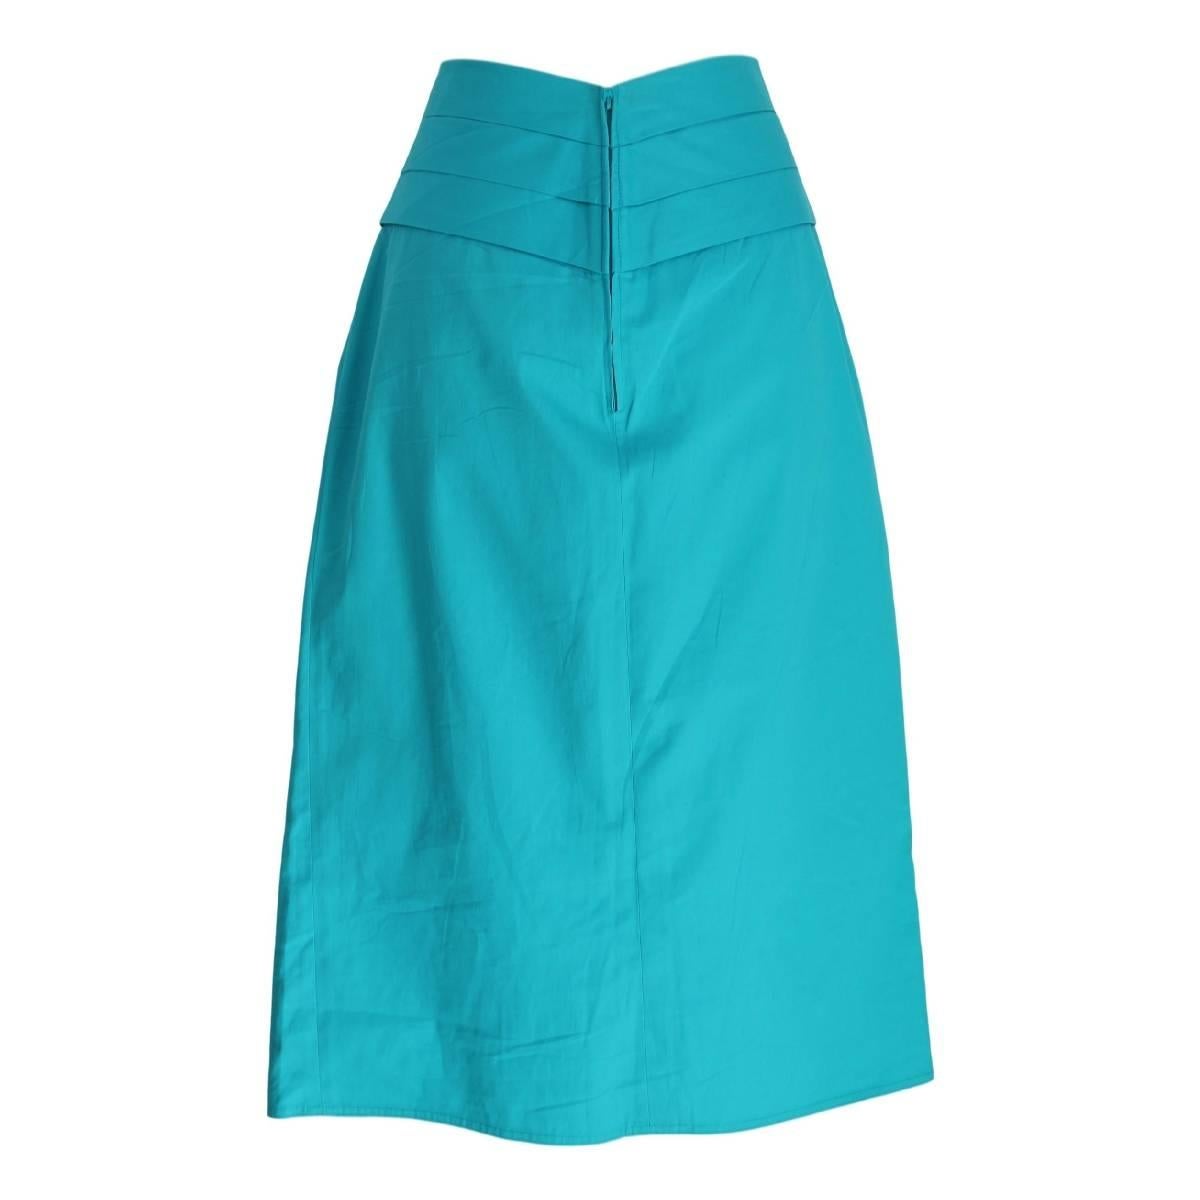 Blue Alberta Ferretti vintage cotton light blue skirt size 46 it made italy